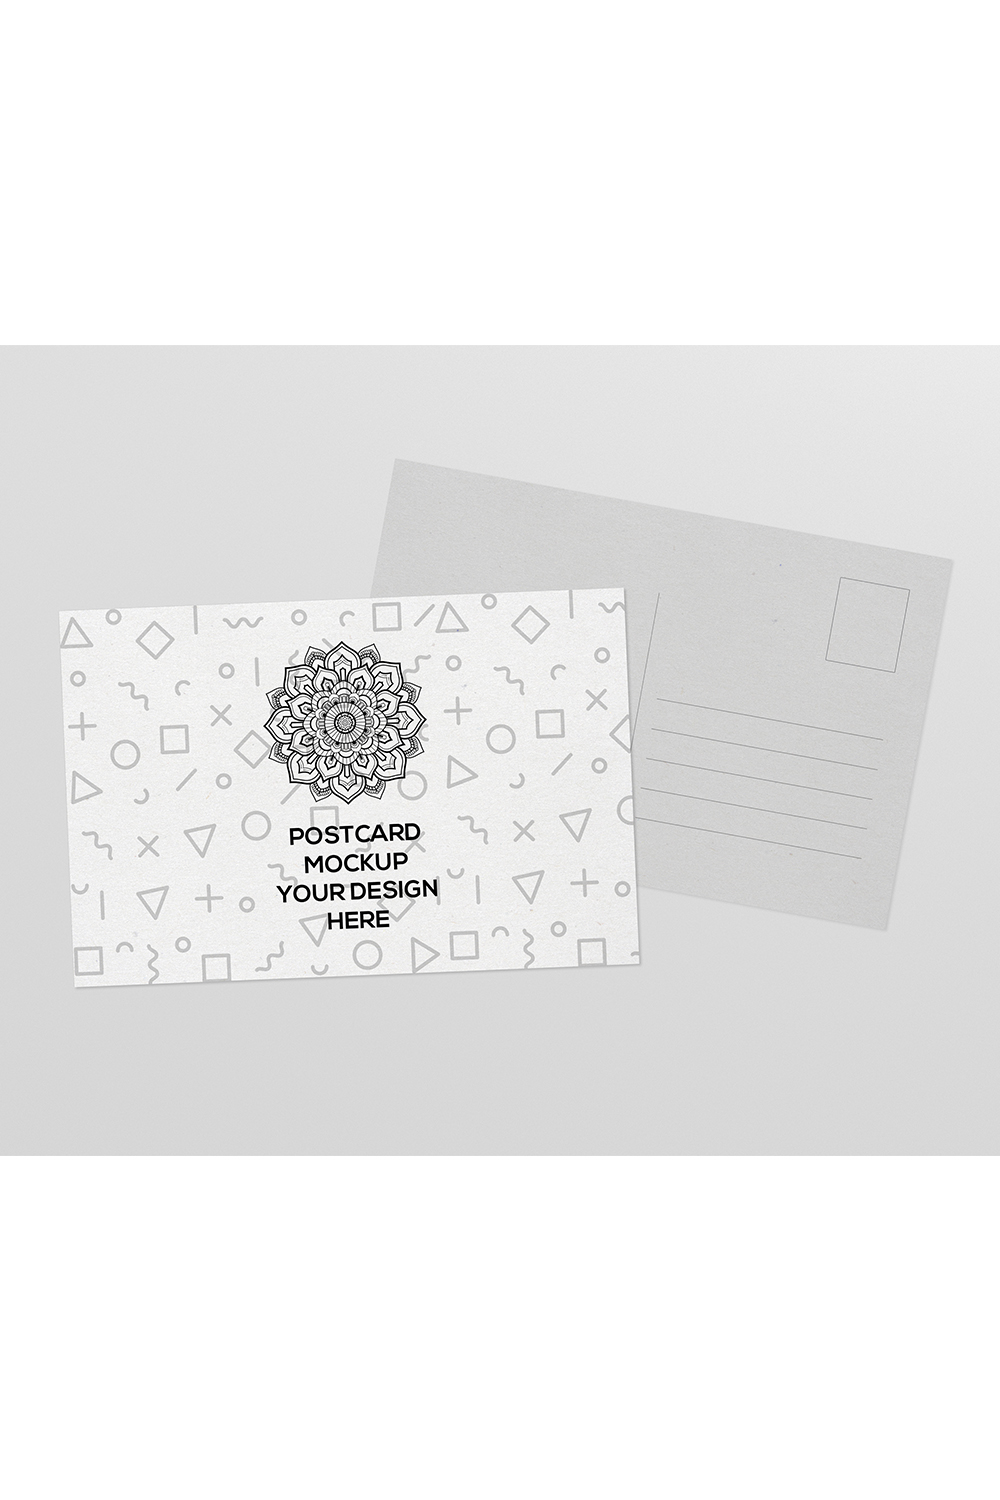 Invitation Card - Postcard Mockup pinterest preview image.